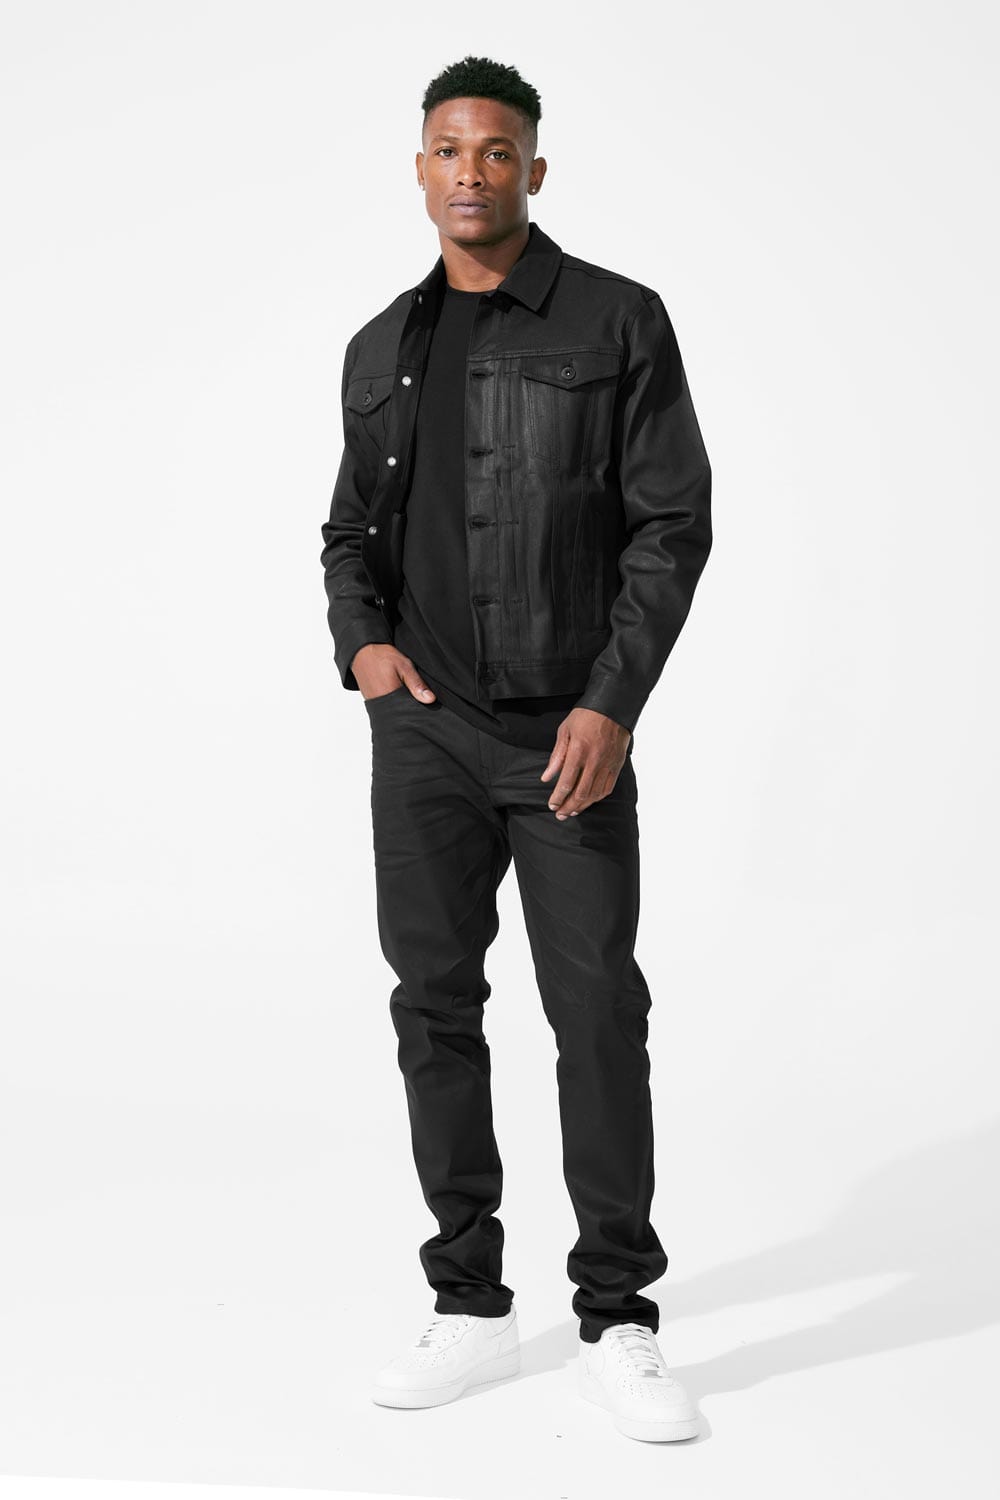 Jet Black Formal Pants for Men - ONE identiti - Wear your identity